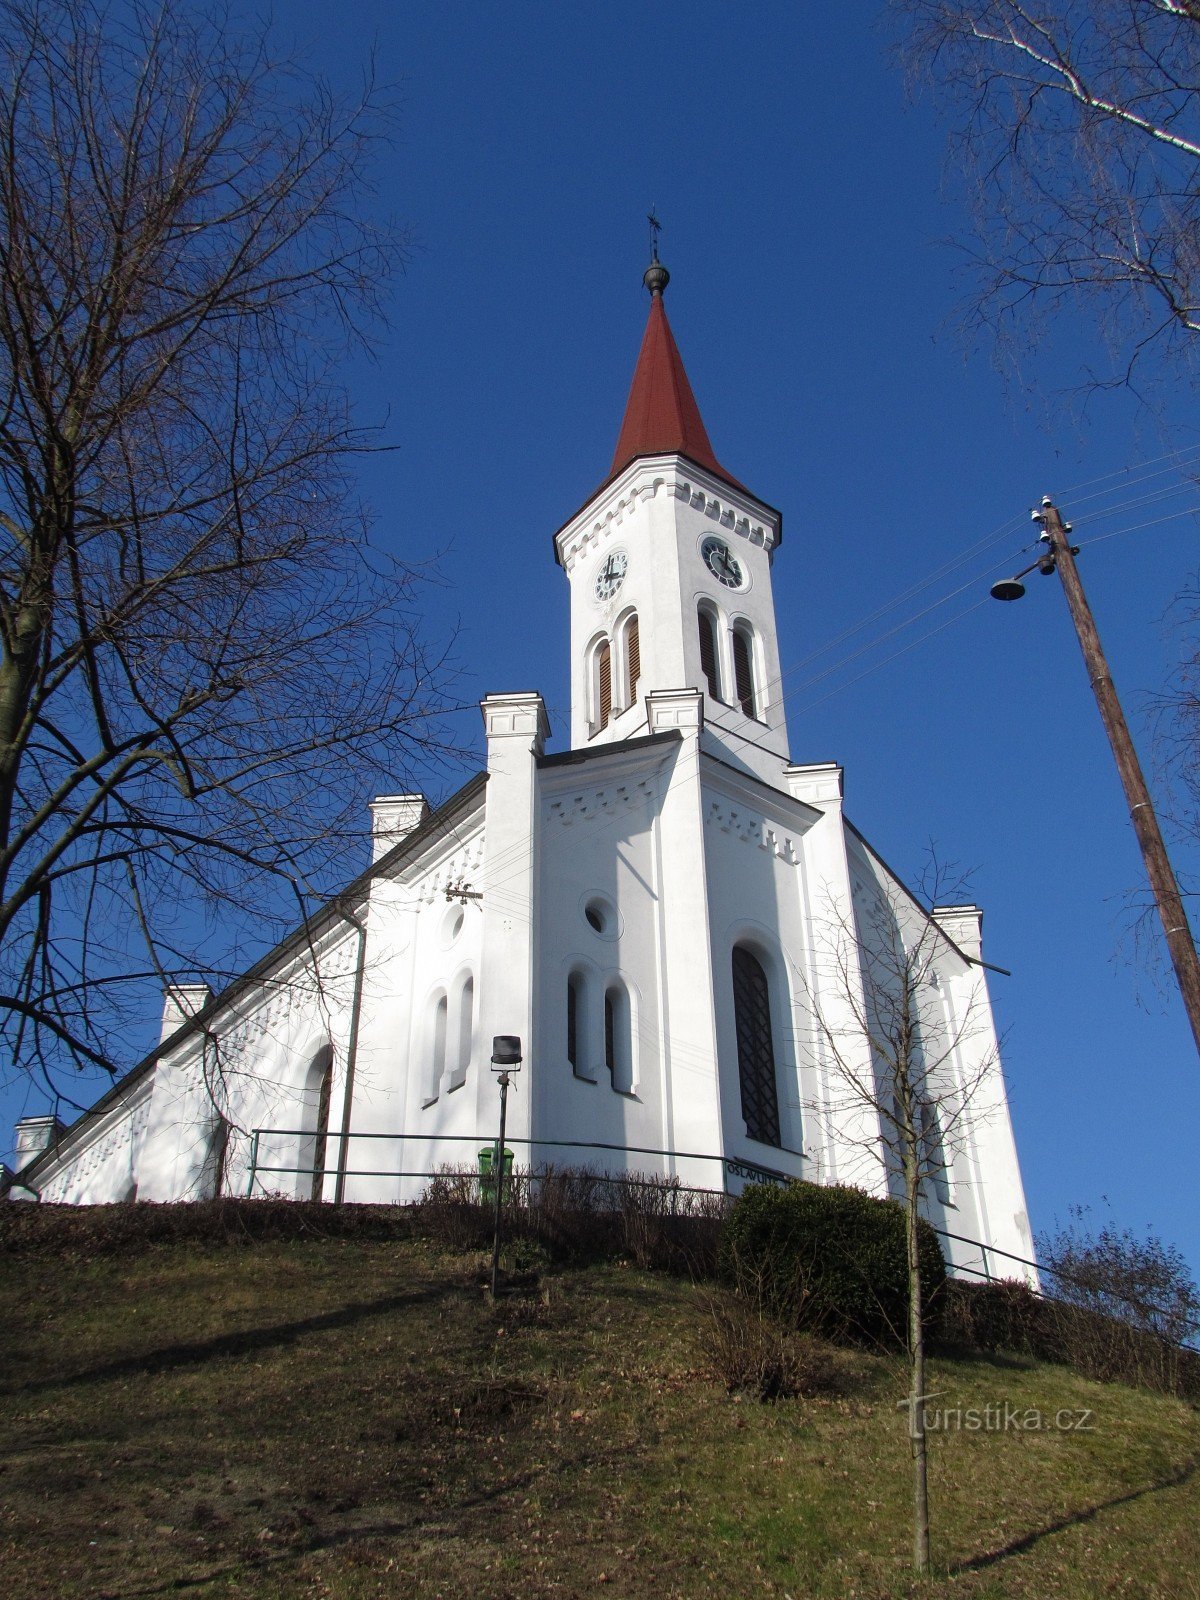 Zádveřice-Raková - kościół ewangelicki